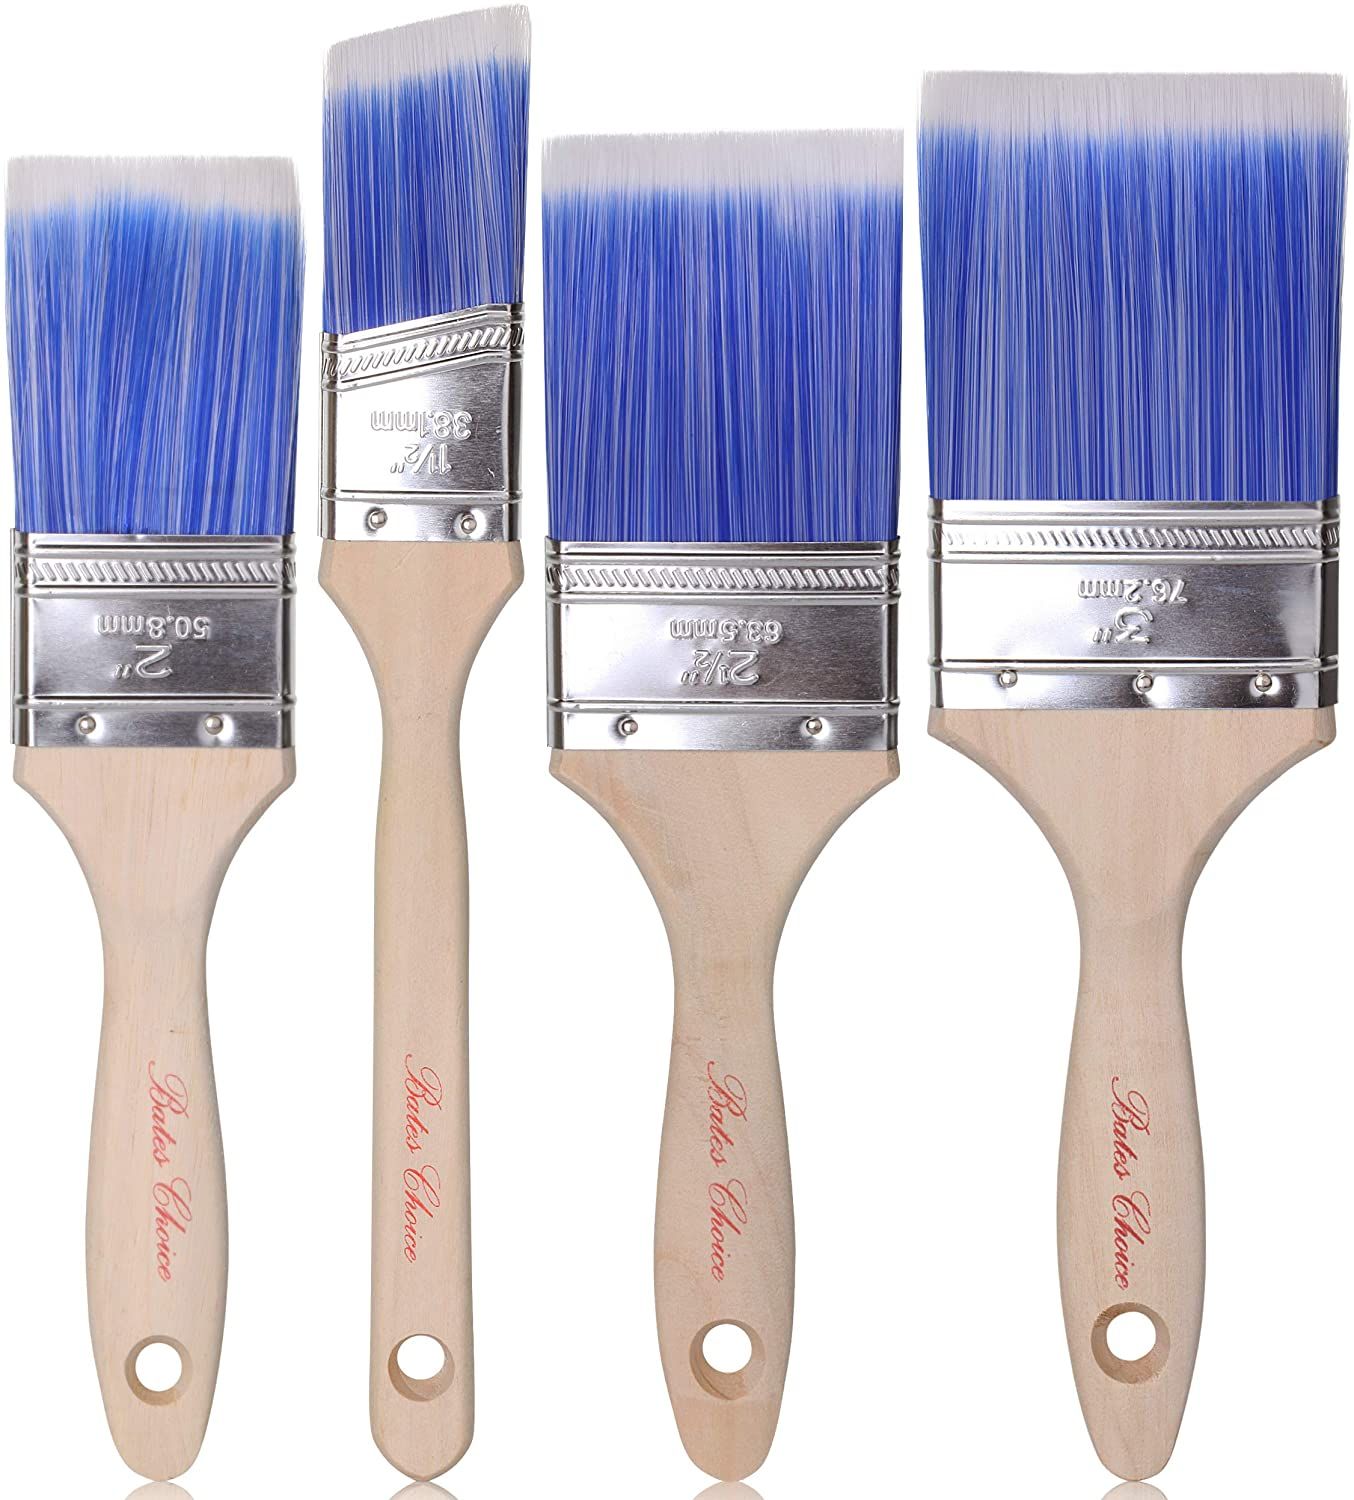 Bates Paint Brushes - $$title$$